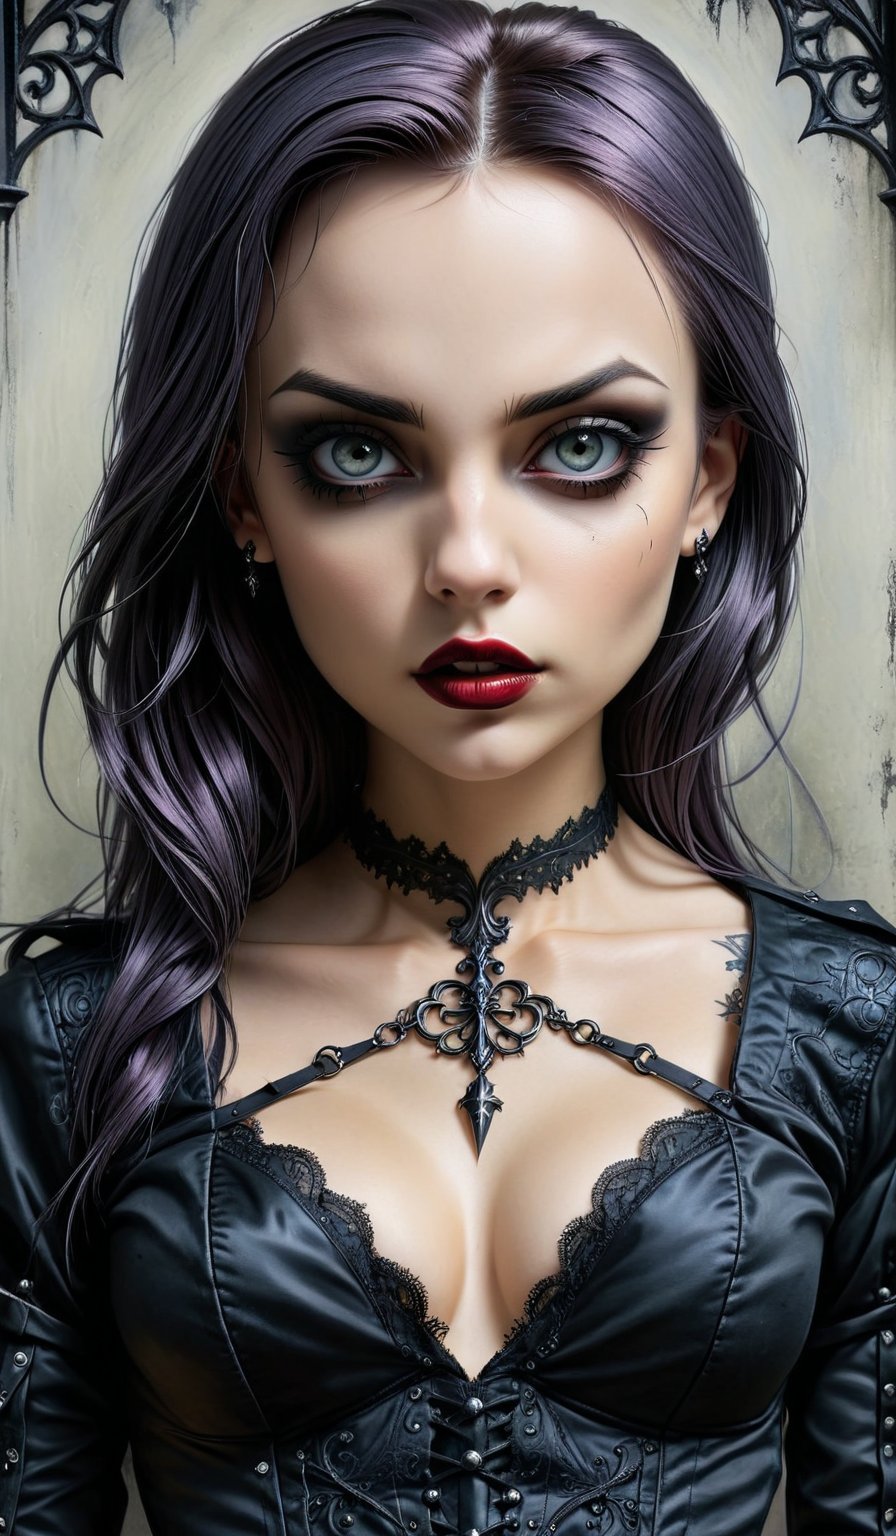 masterpiece,best quality,realistic,style of Jessica Galbreth upper body portrait of dark gothic girl, dynamic pose, Gothic,emo